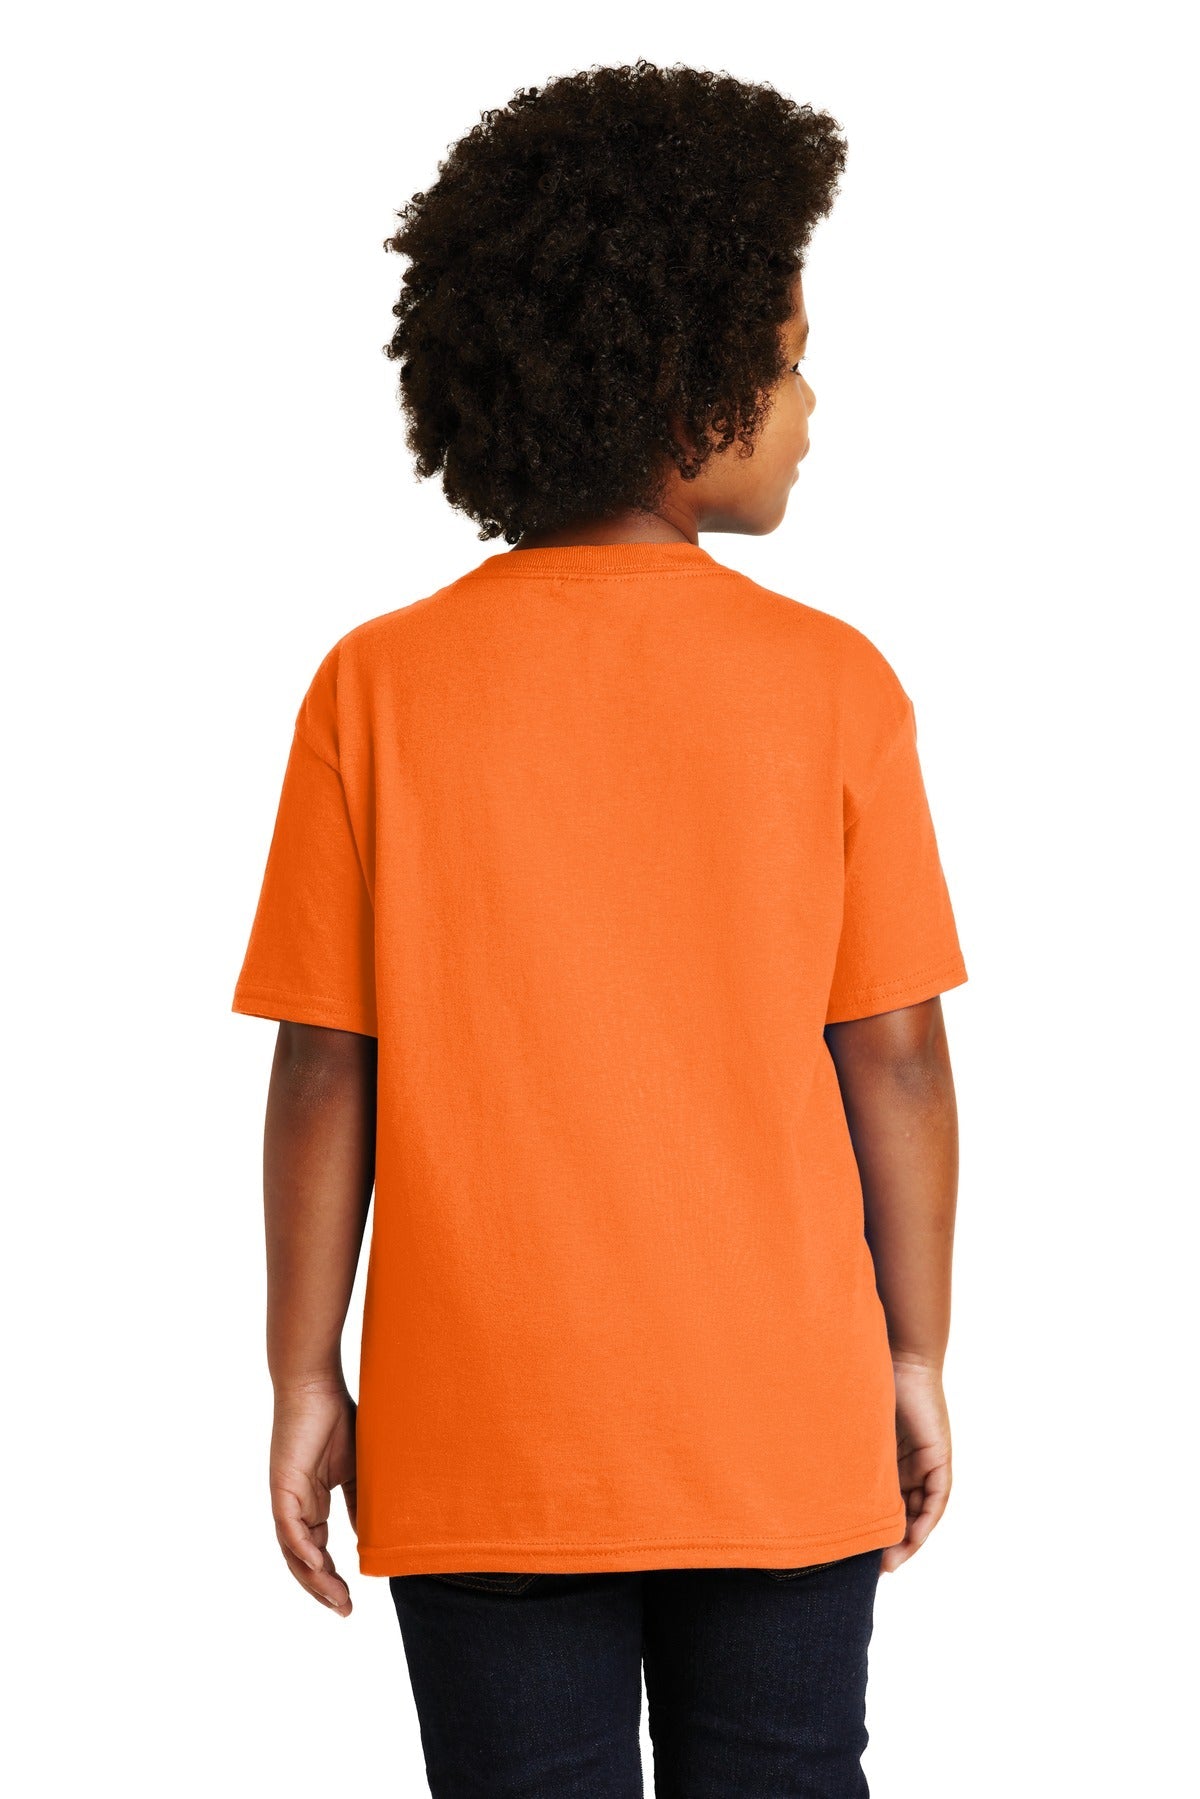 Gildan® - Youth Ultra Cotton®100% US Cotton T-Shirt. 2000B [S. Orange] - DFW Impression